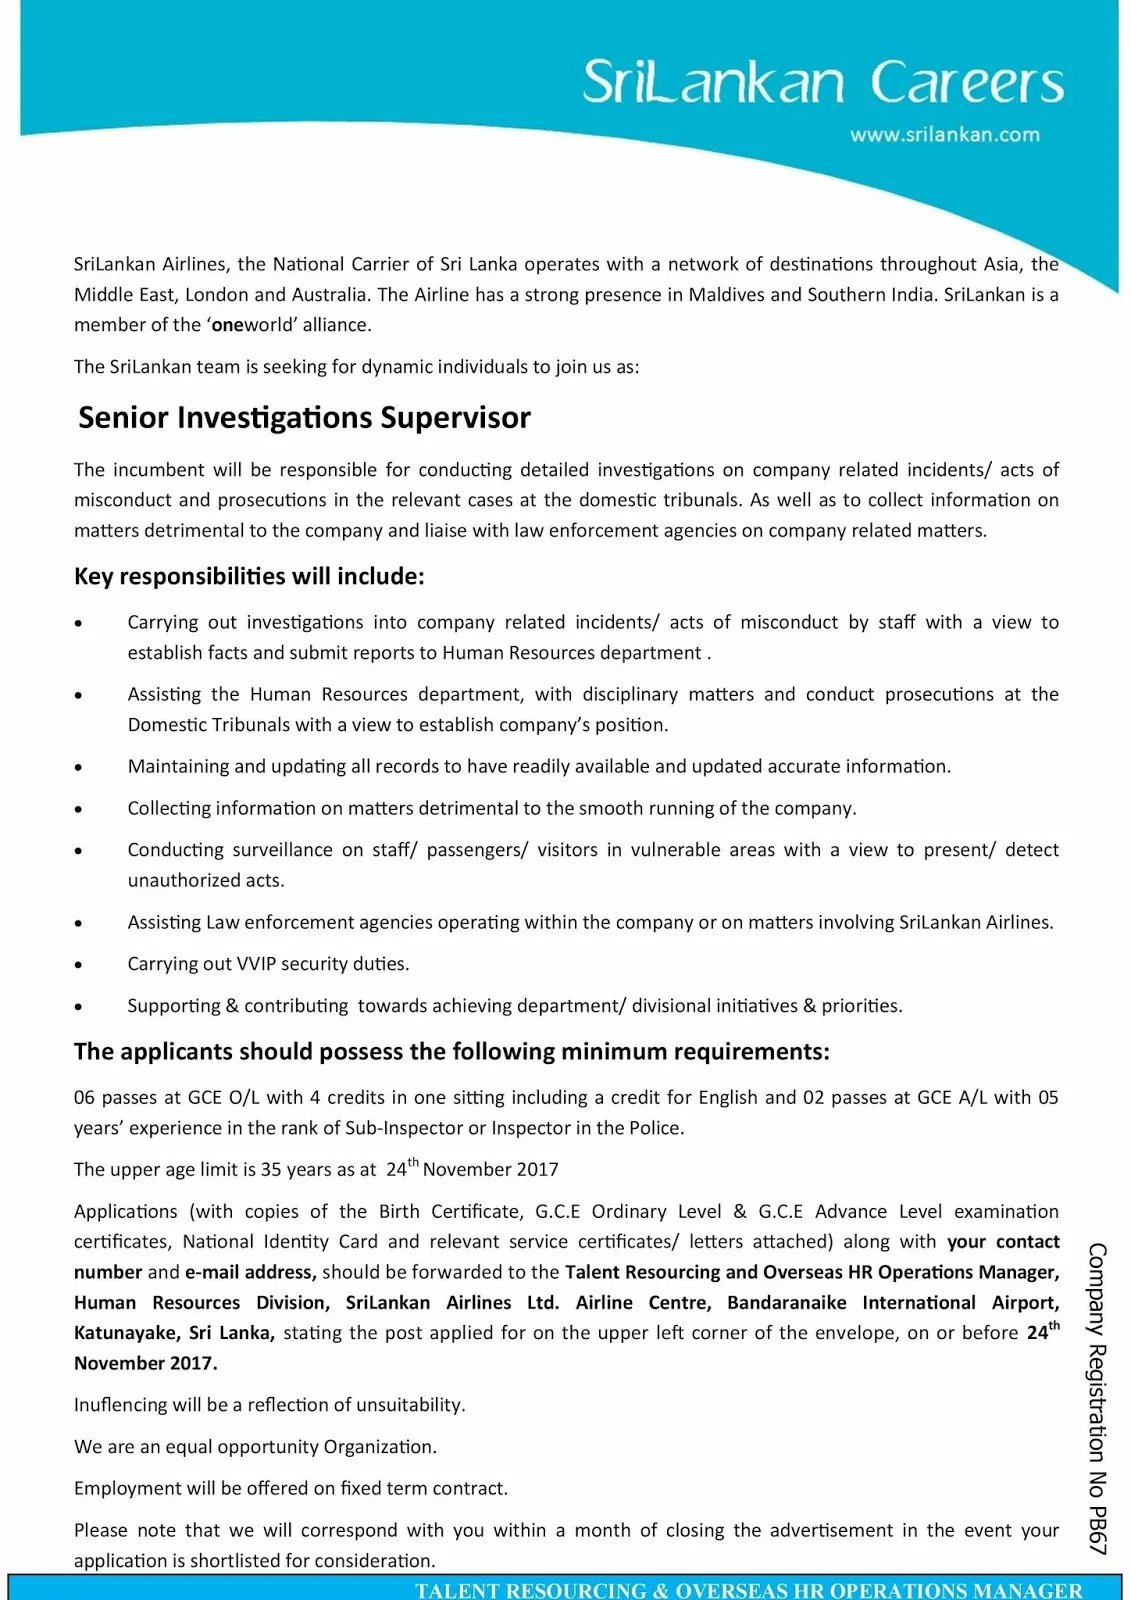 Senior Investigation Supervisor Vacancy in SriLankan Airlines